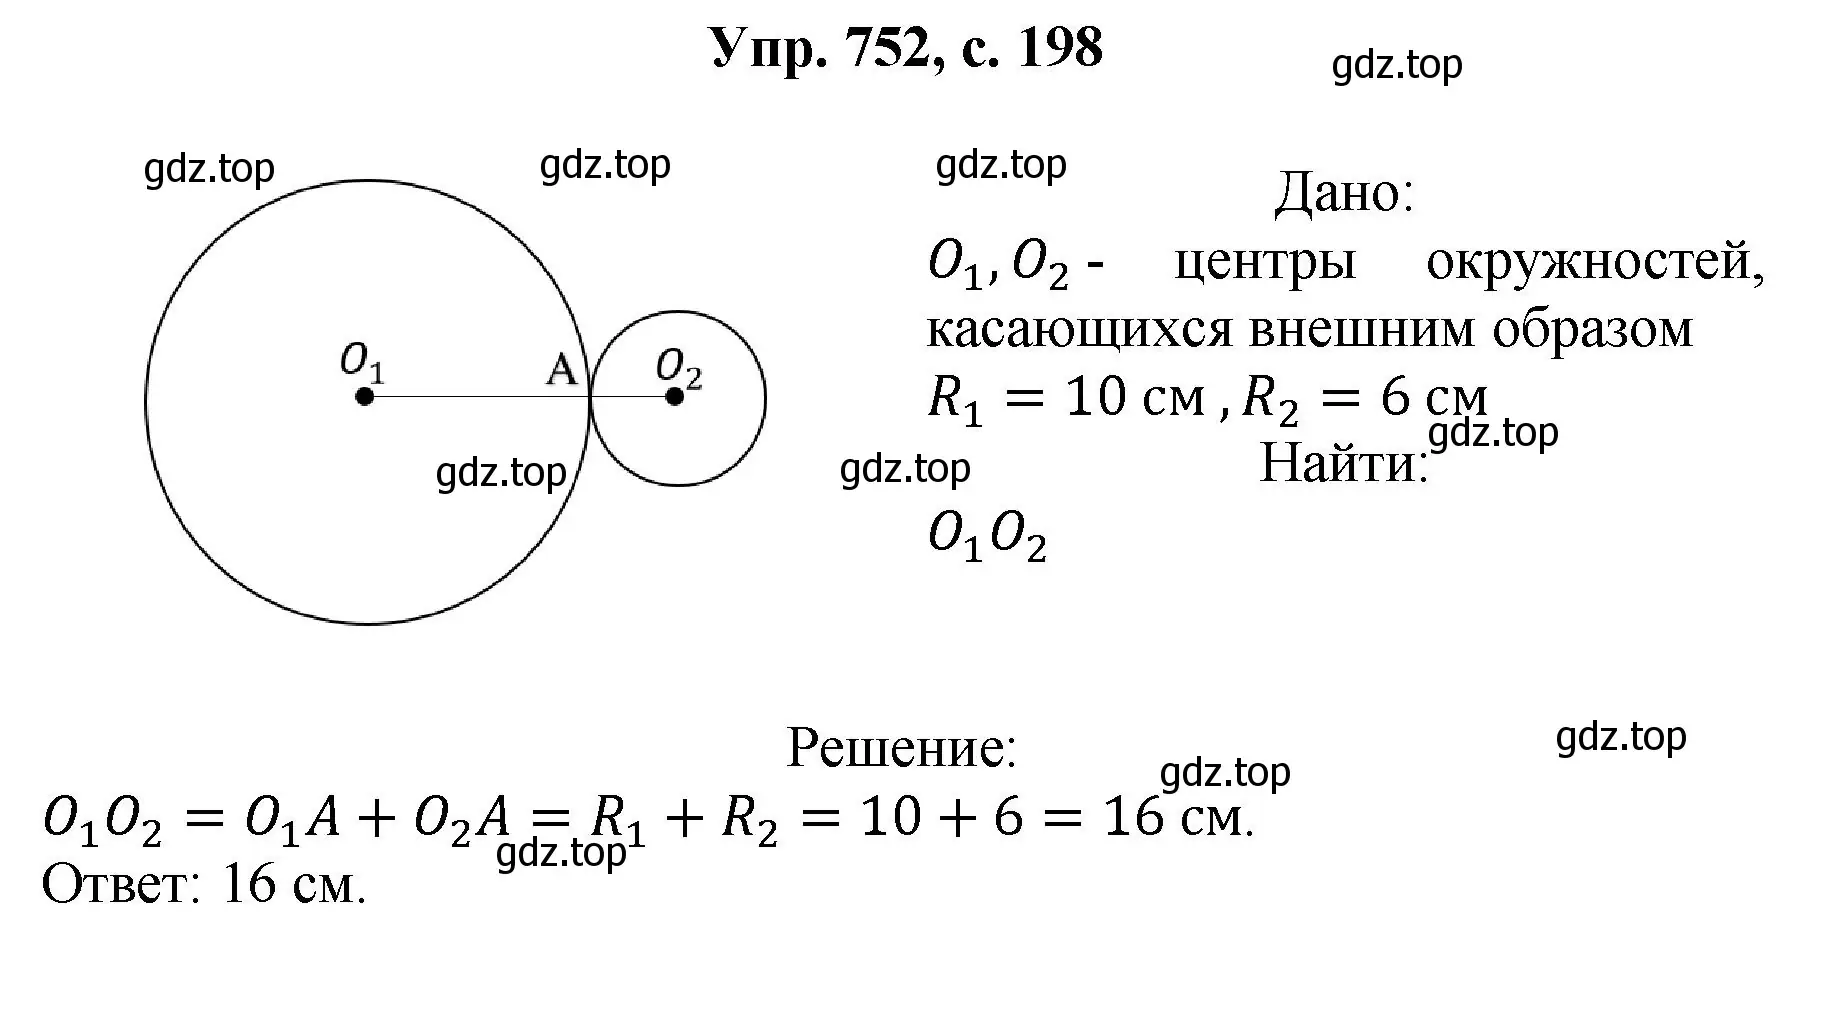 Решение номер 752 (страница 198) гдз по геометрии 7-9 класс Атанасян, Бутузов, учебник